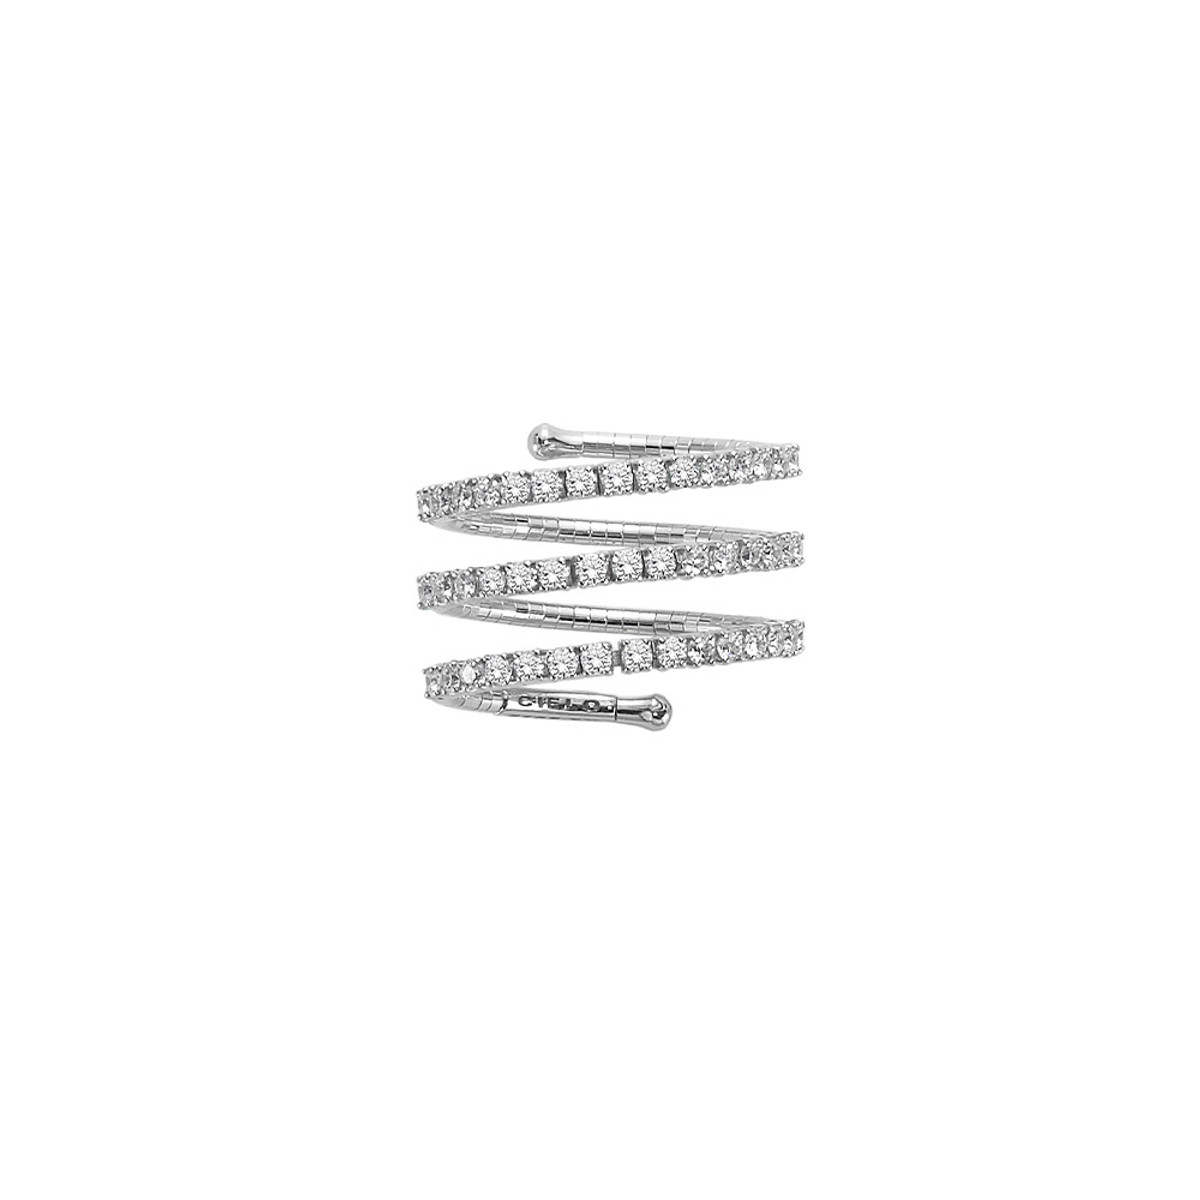 Mattia Cielo 18K White Gold 3 Row Spiral Diamond Pave Ring-67259 Product Image